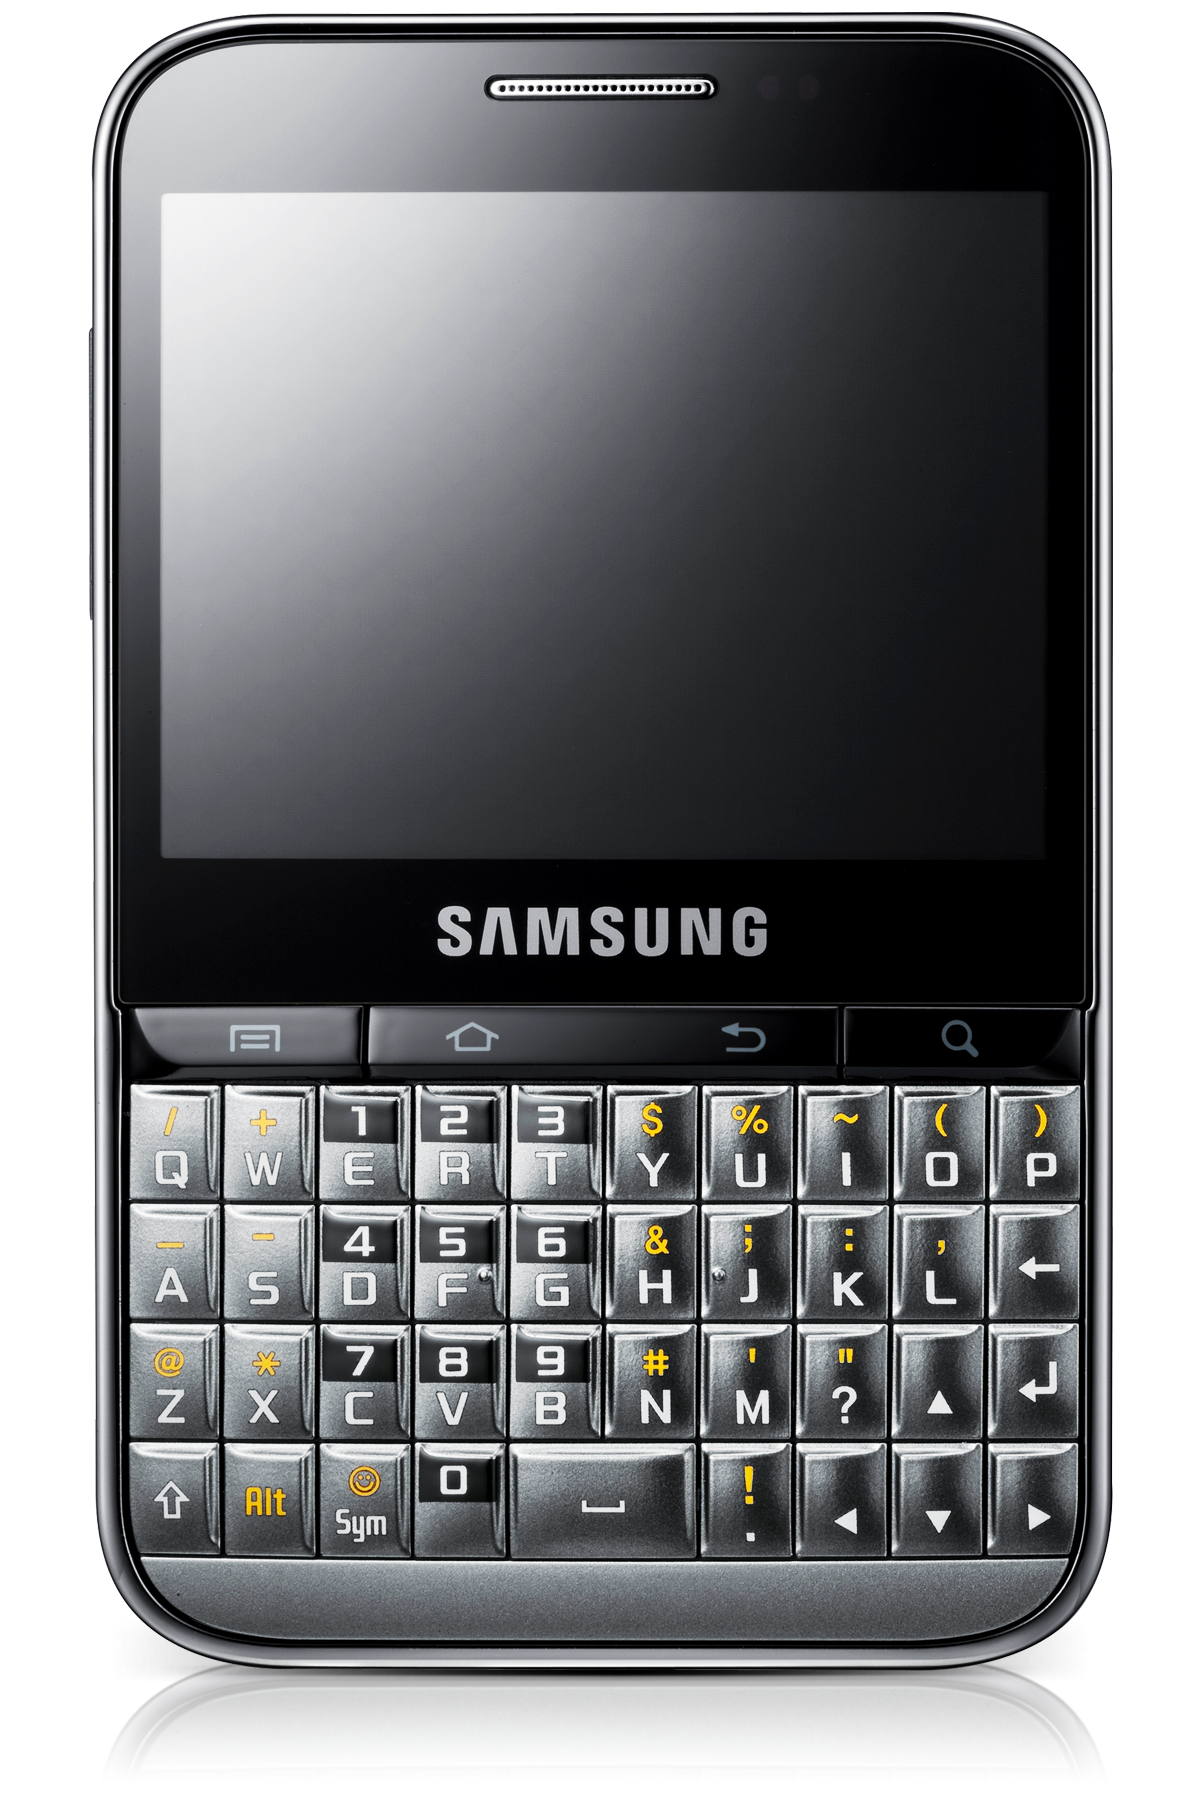 Samsung Galaxy Pro b7510. Samsung Galaxy Pro gt-b7510. Samsung Galaxy Pro 7510. Samsung с кверти клавиатурой. Кнопочный без андроид